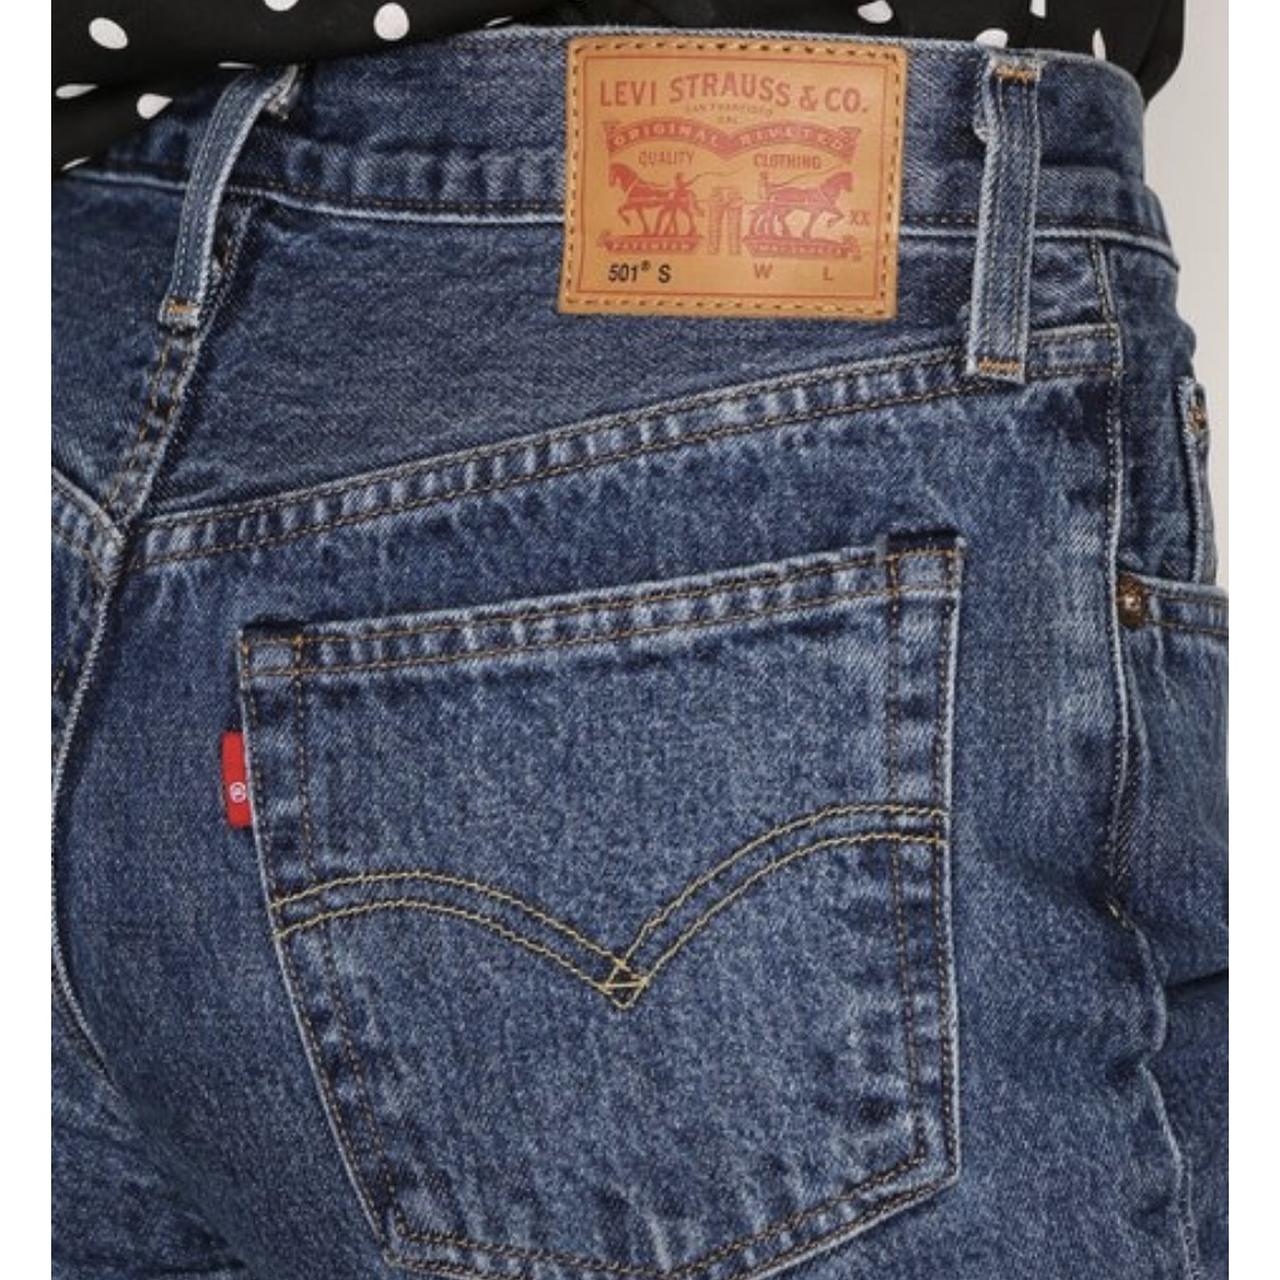 Levi's 501 Skinny Selvedge Jeans in Pop Rock. 28”... Depop